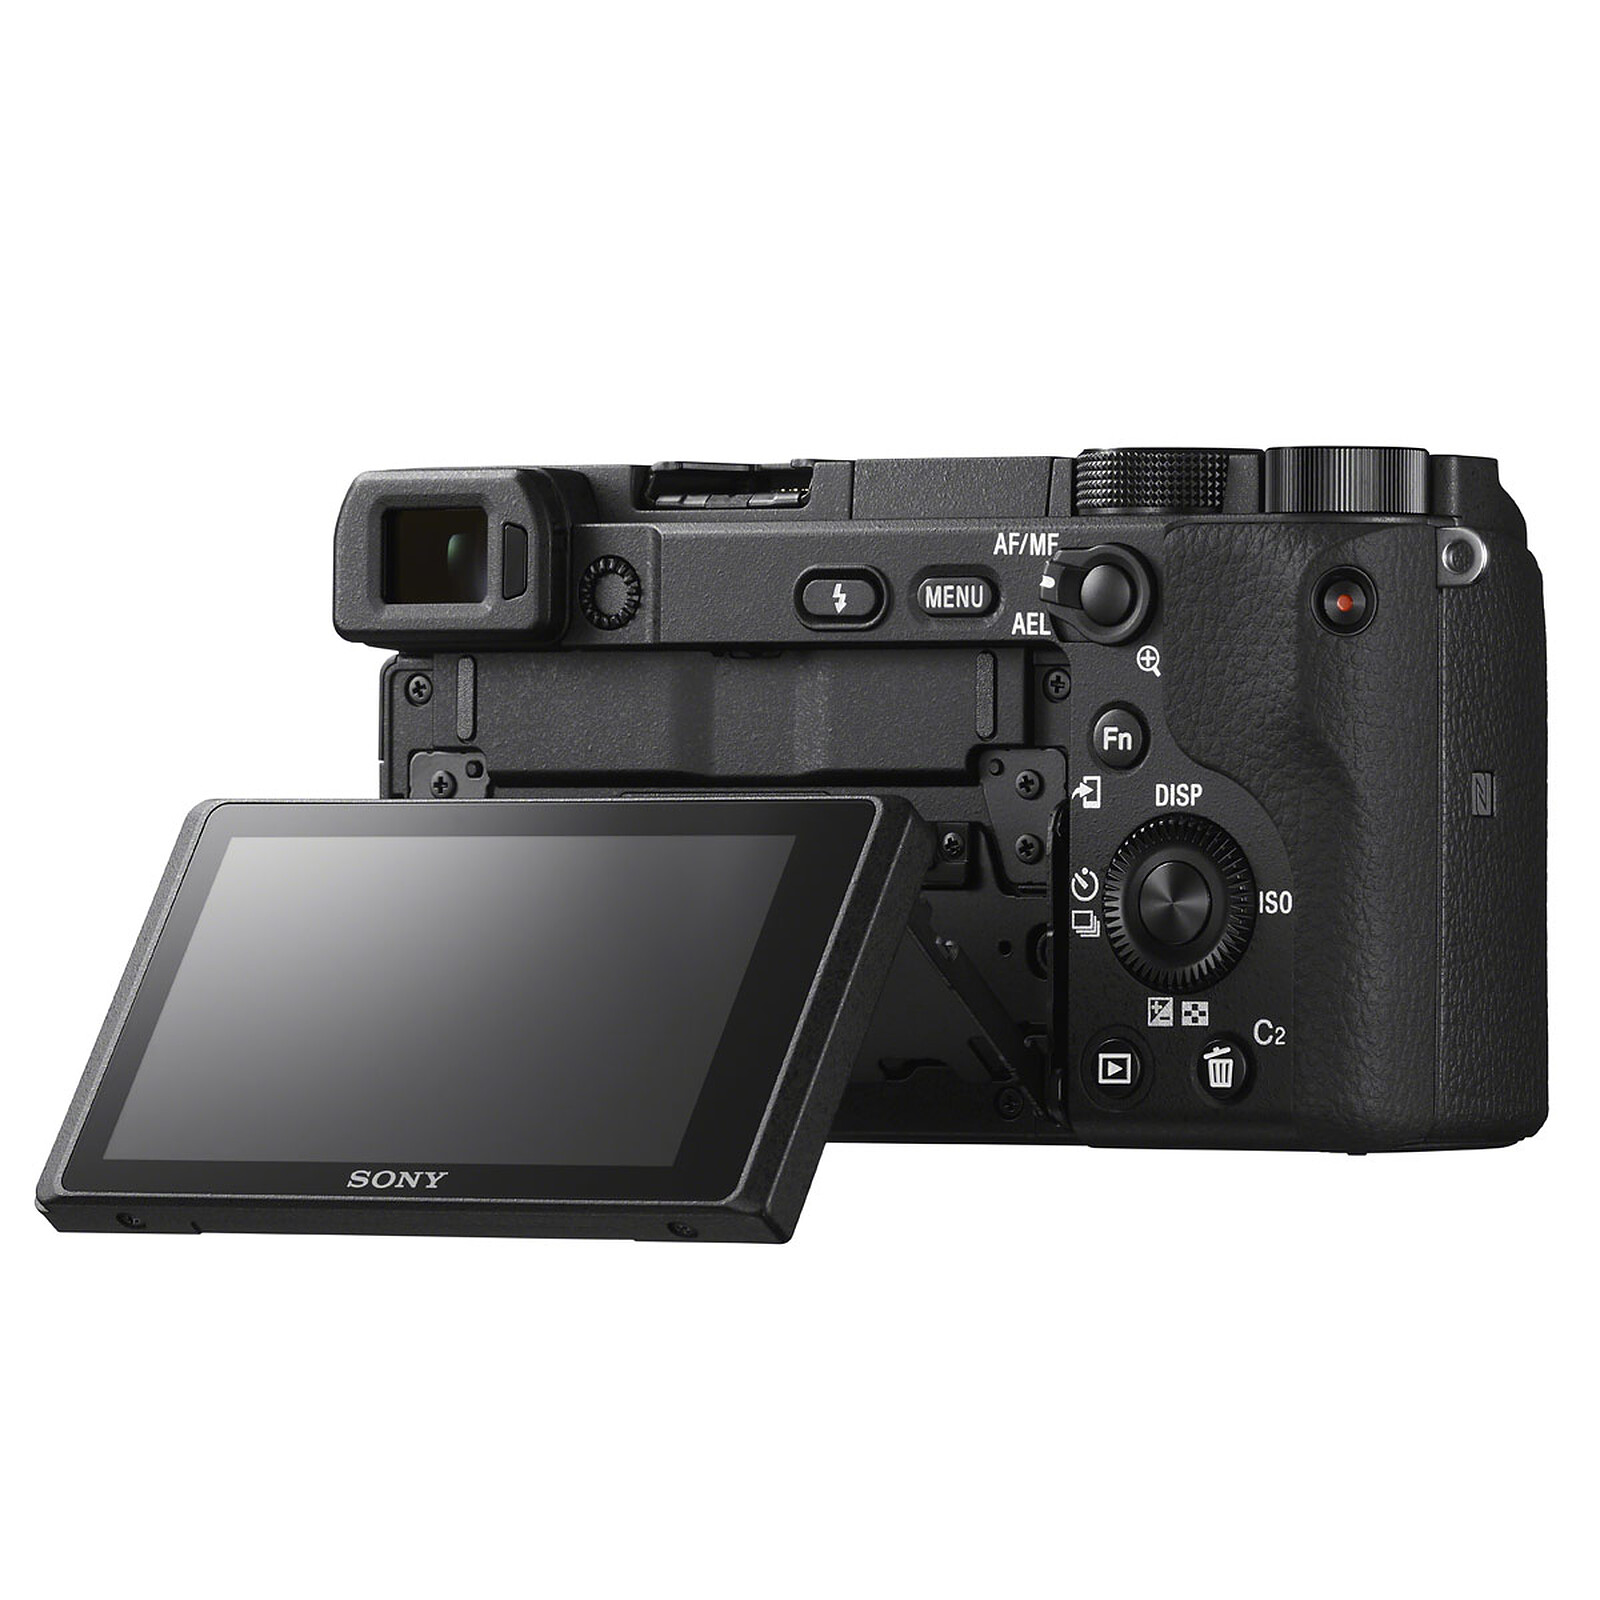 Sony Alpha A7 III - Características técnicas, opiniones, valoración